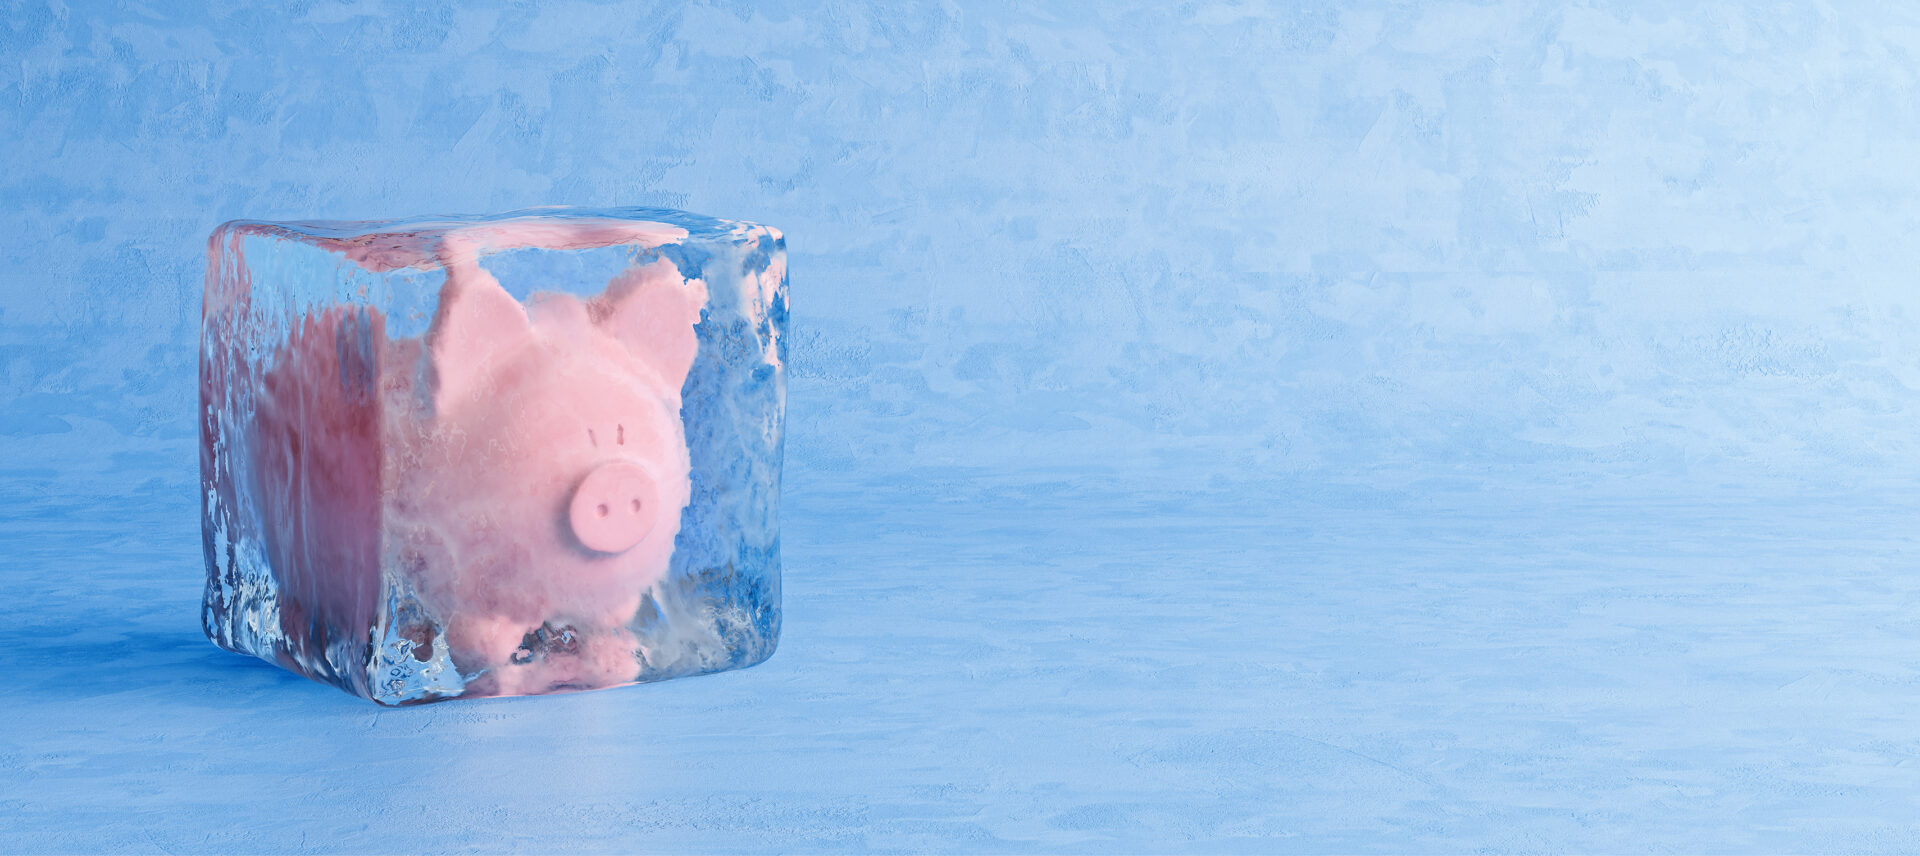 Piggy bank frozen in ice